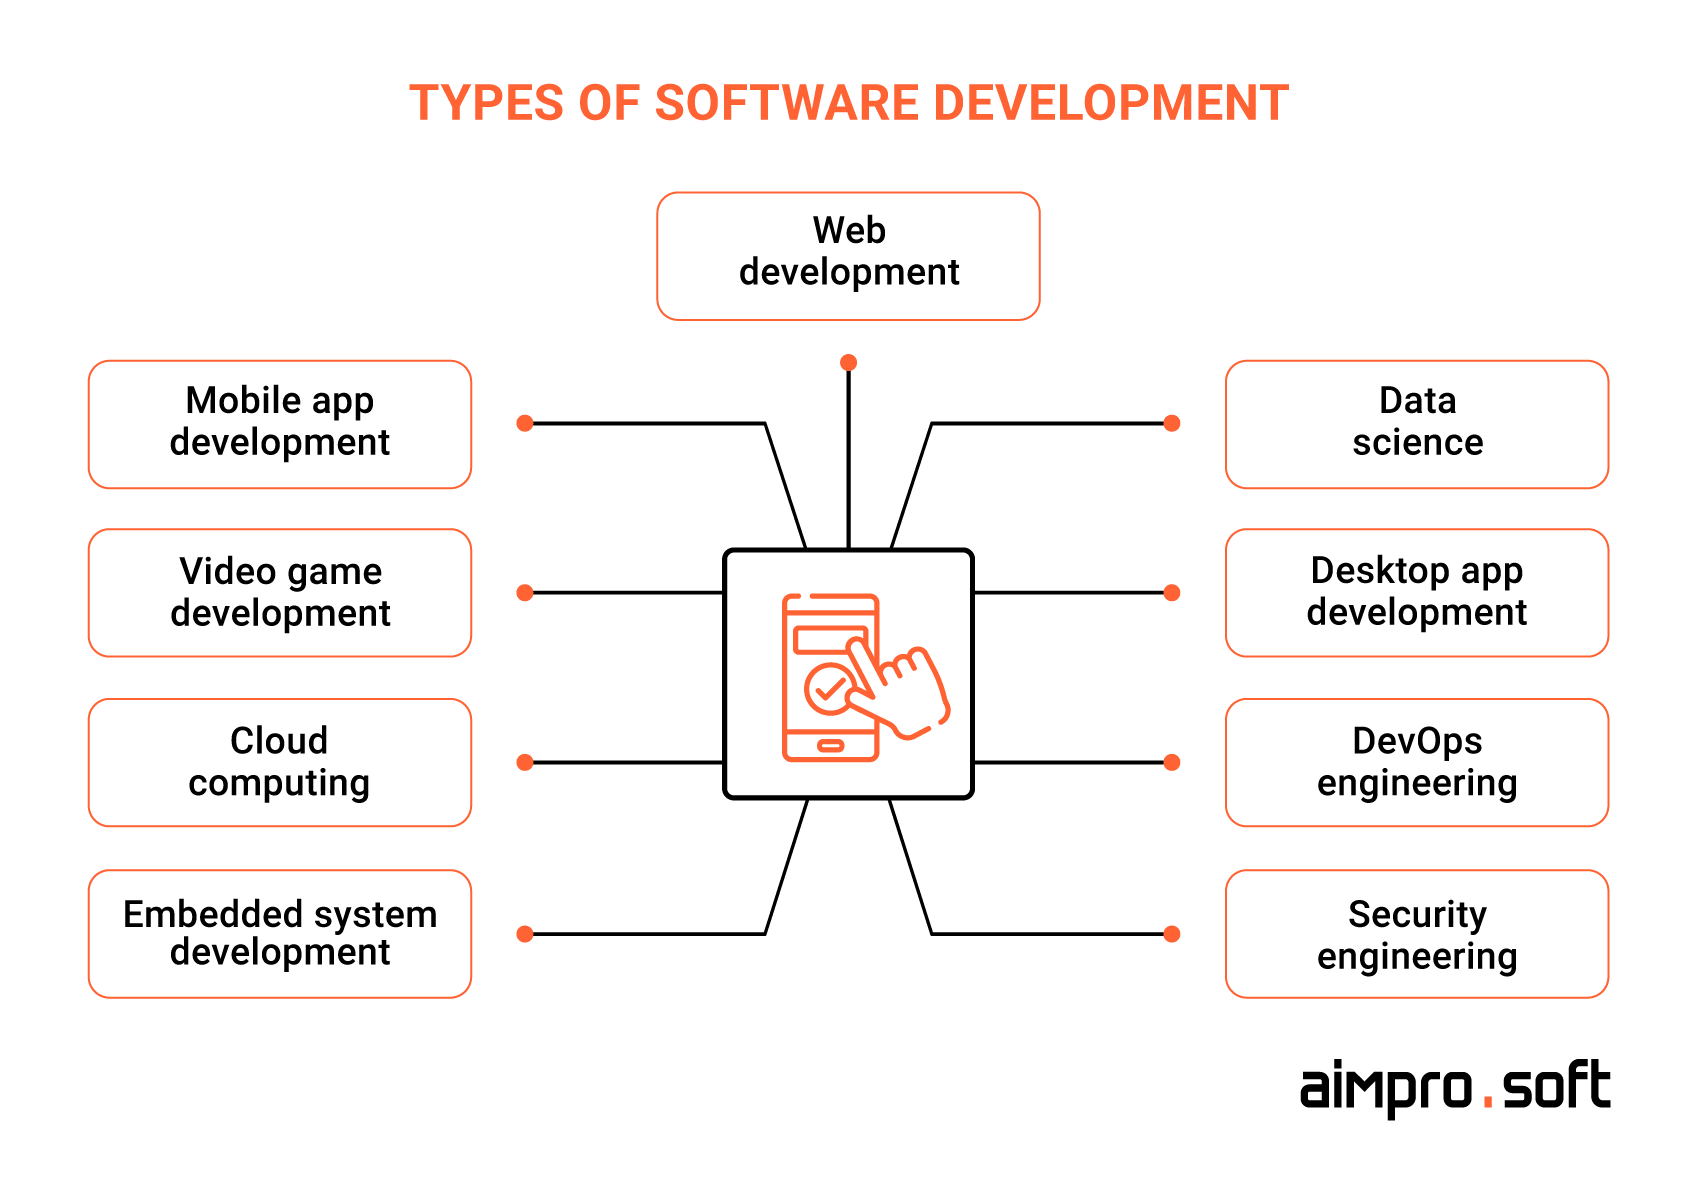 Types of software development